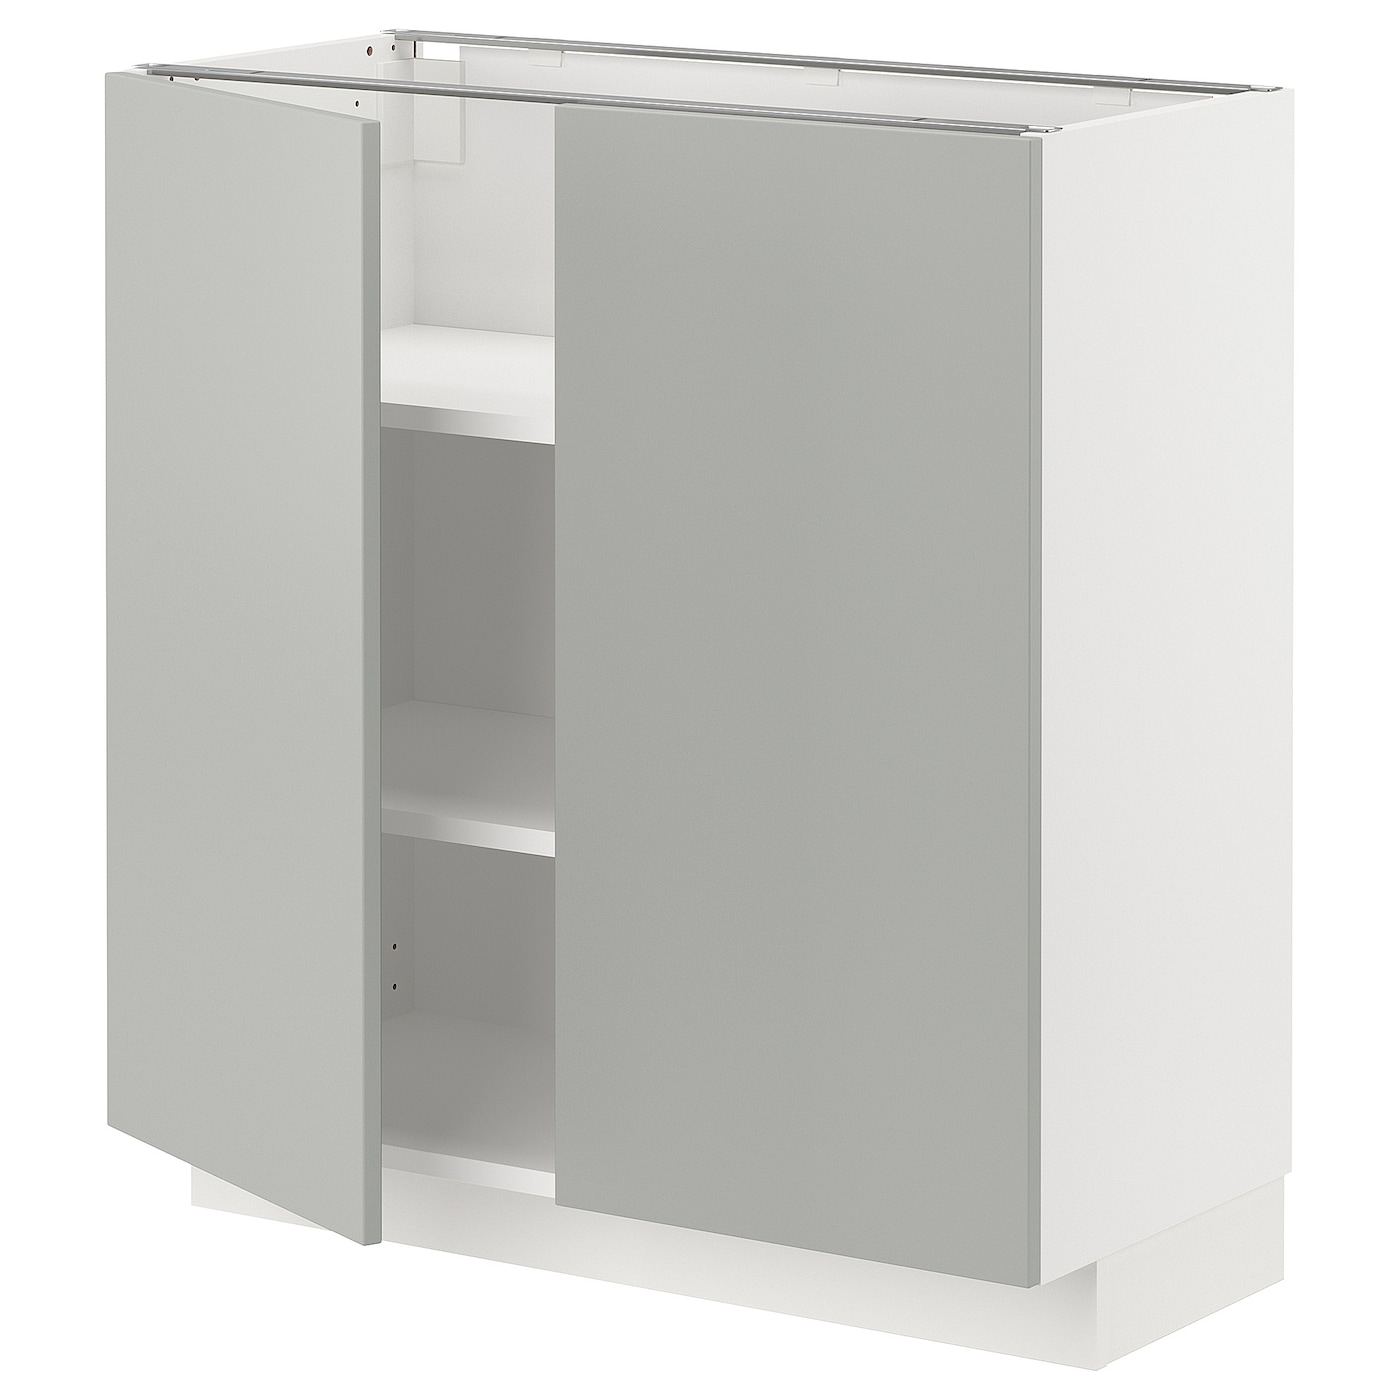 Напольный шкаф - METOD IKEA/ МЕТОД ИКЕА,  80х88 см, белый/светло-серый